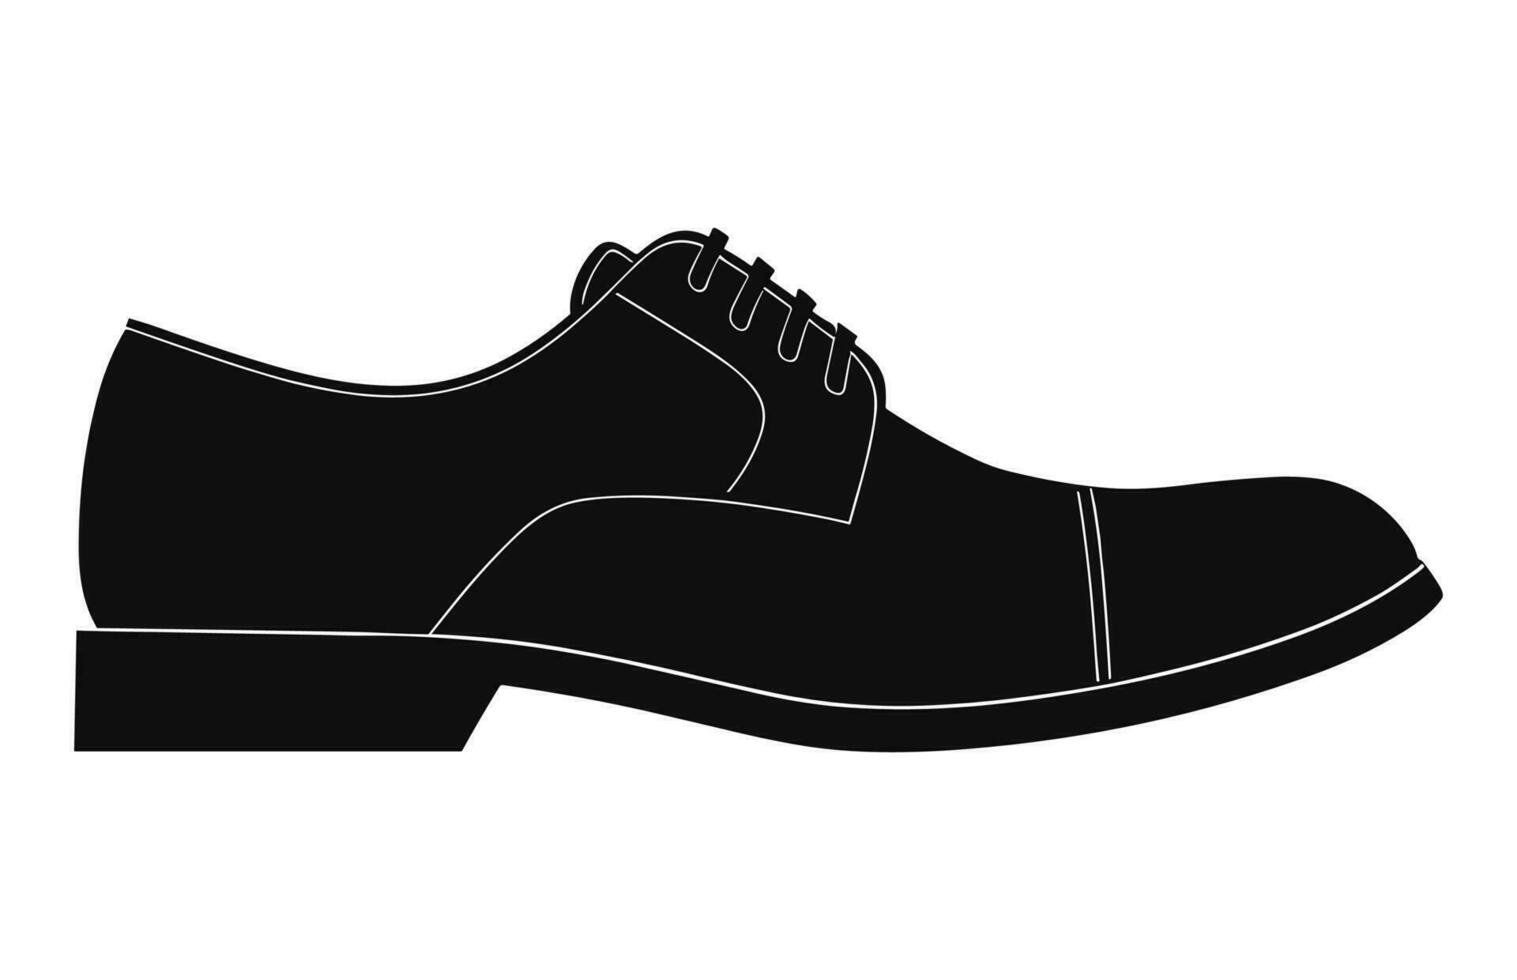 A Male Shoe black silhouette vector free